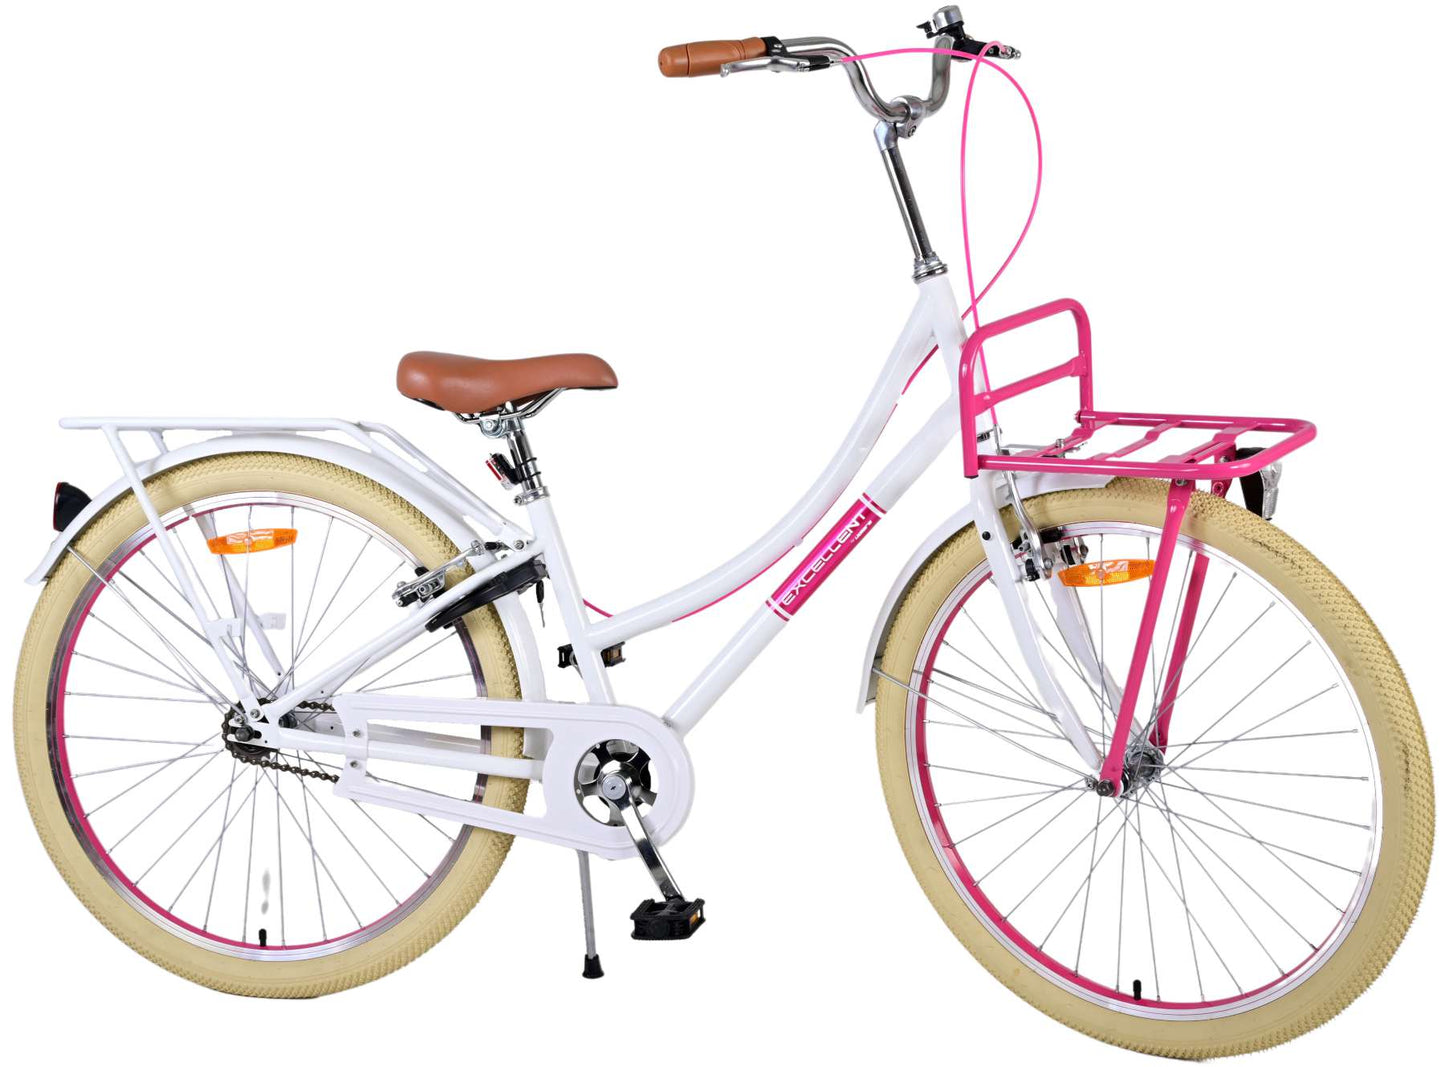 Volare Excelente bicicleta para niños - niñas - 26 pulgadas - blancos - dos frenos de mano